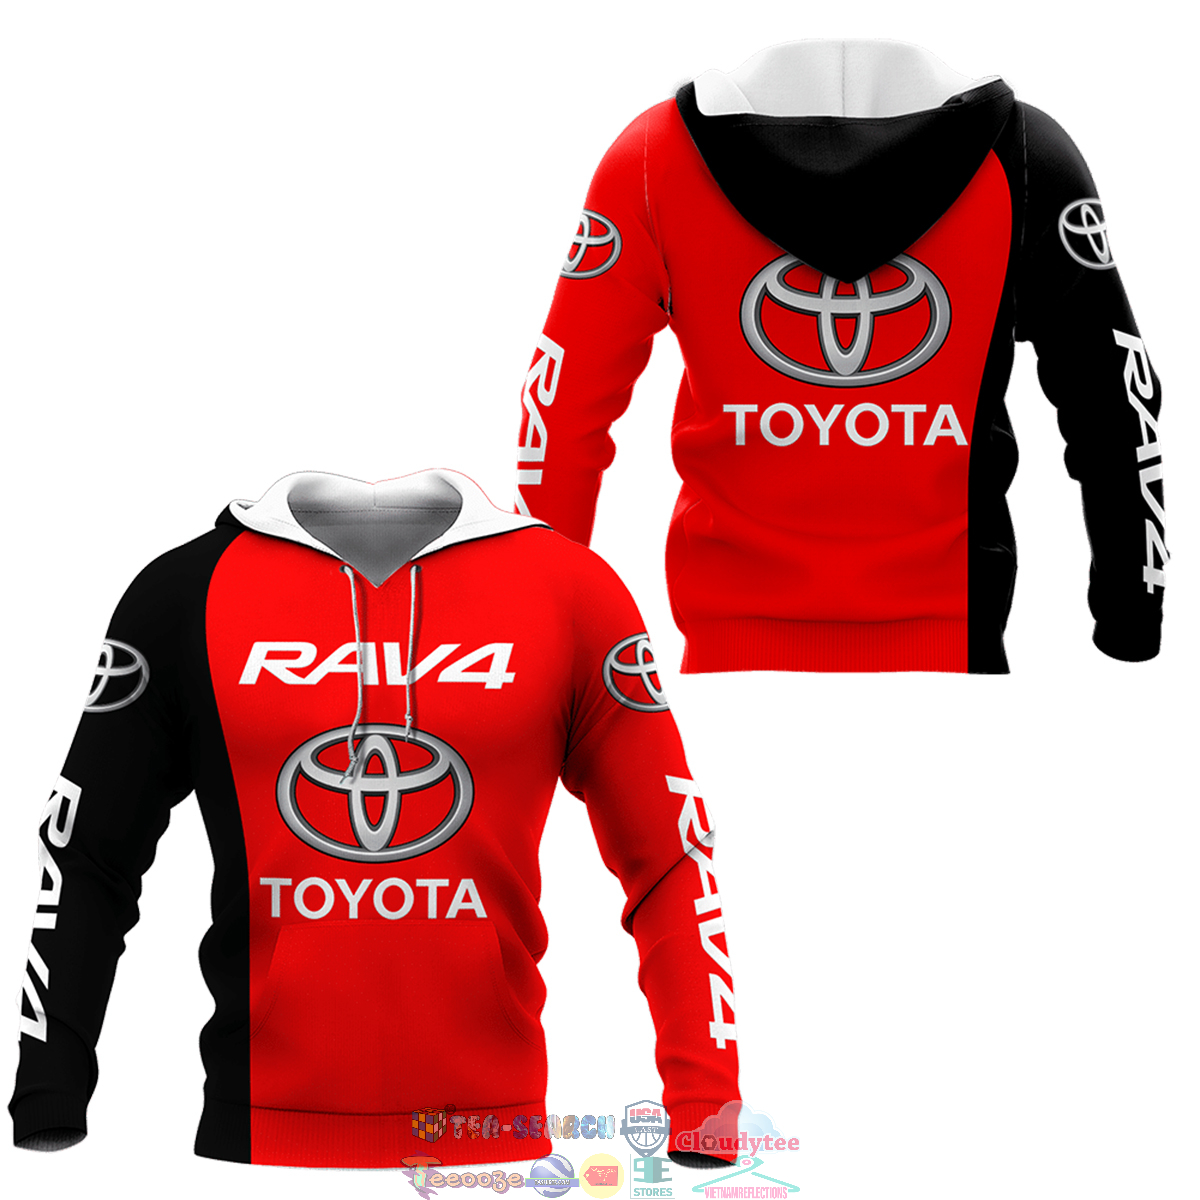 Toyota Rav4 ver 2 hoodie and t-shirt – Saleoff